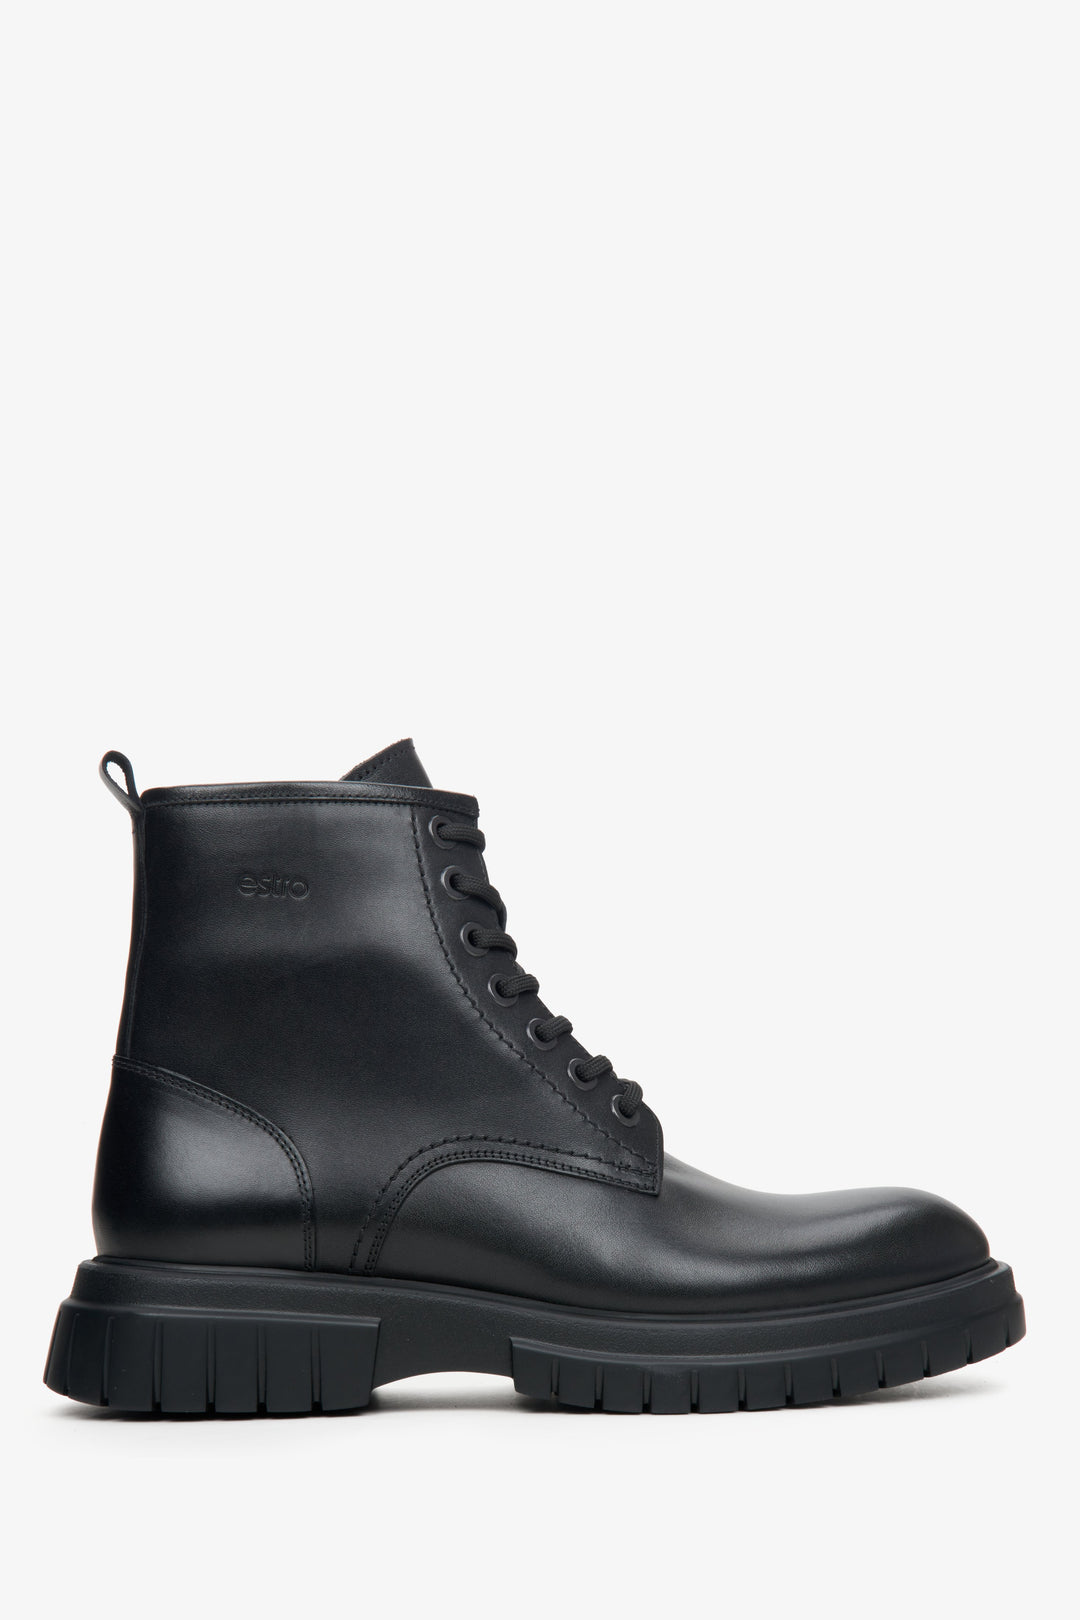 Men's Black Ankle Boots made of Genuine Leather Estro ER00114070